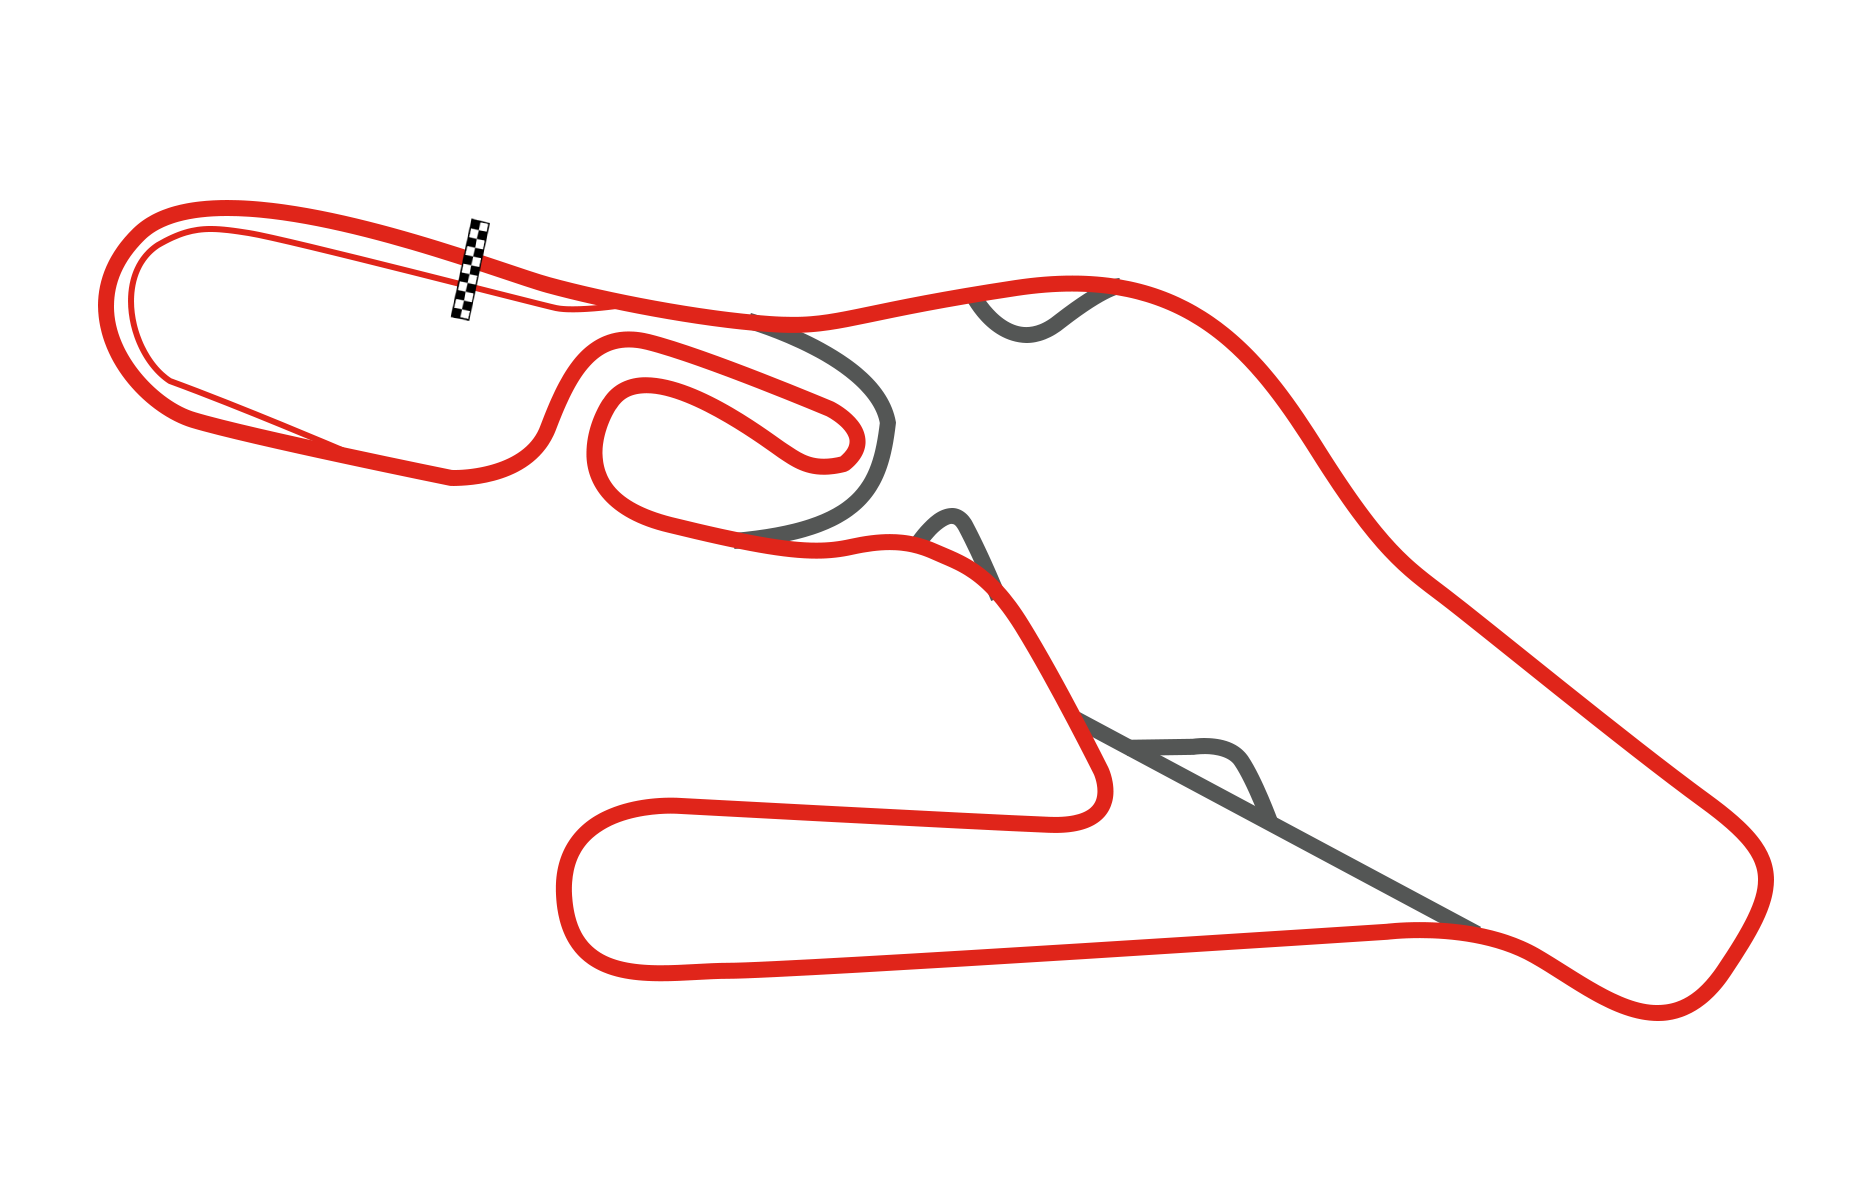 ACI Vallelunga Circuit